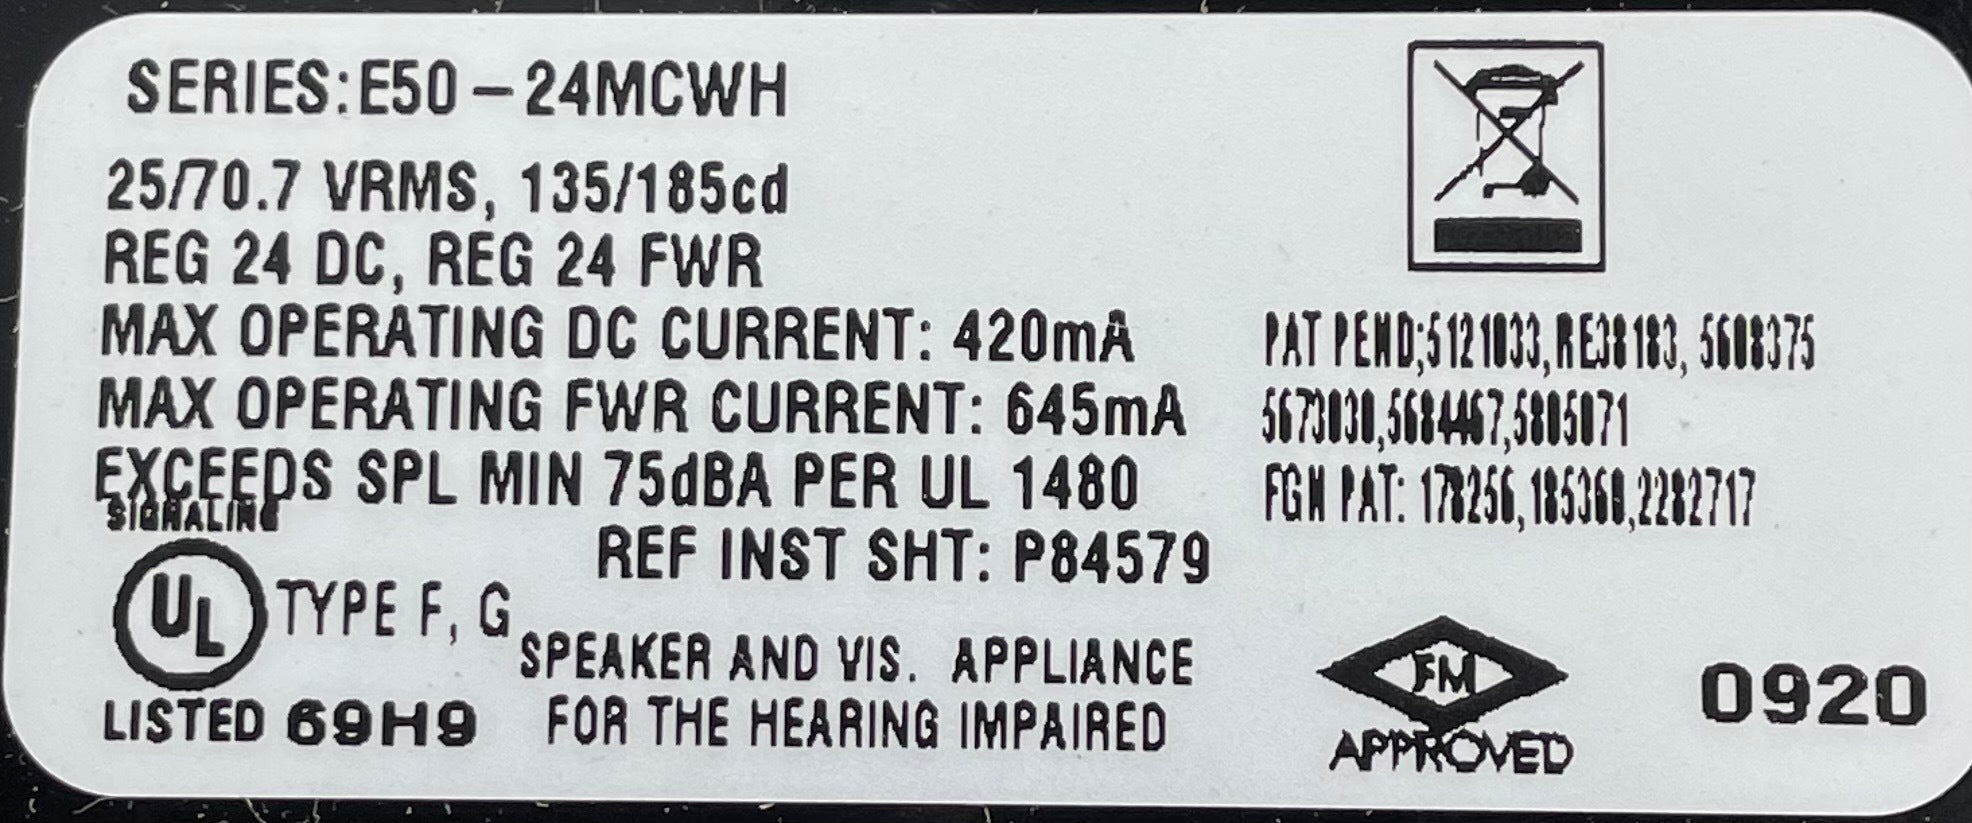 Wheelock E50-24MCWH-FW - The Fire Alarm Supplier